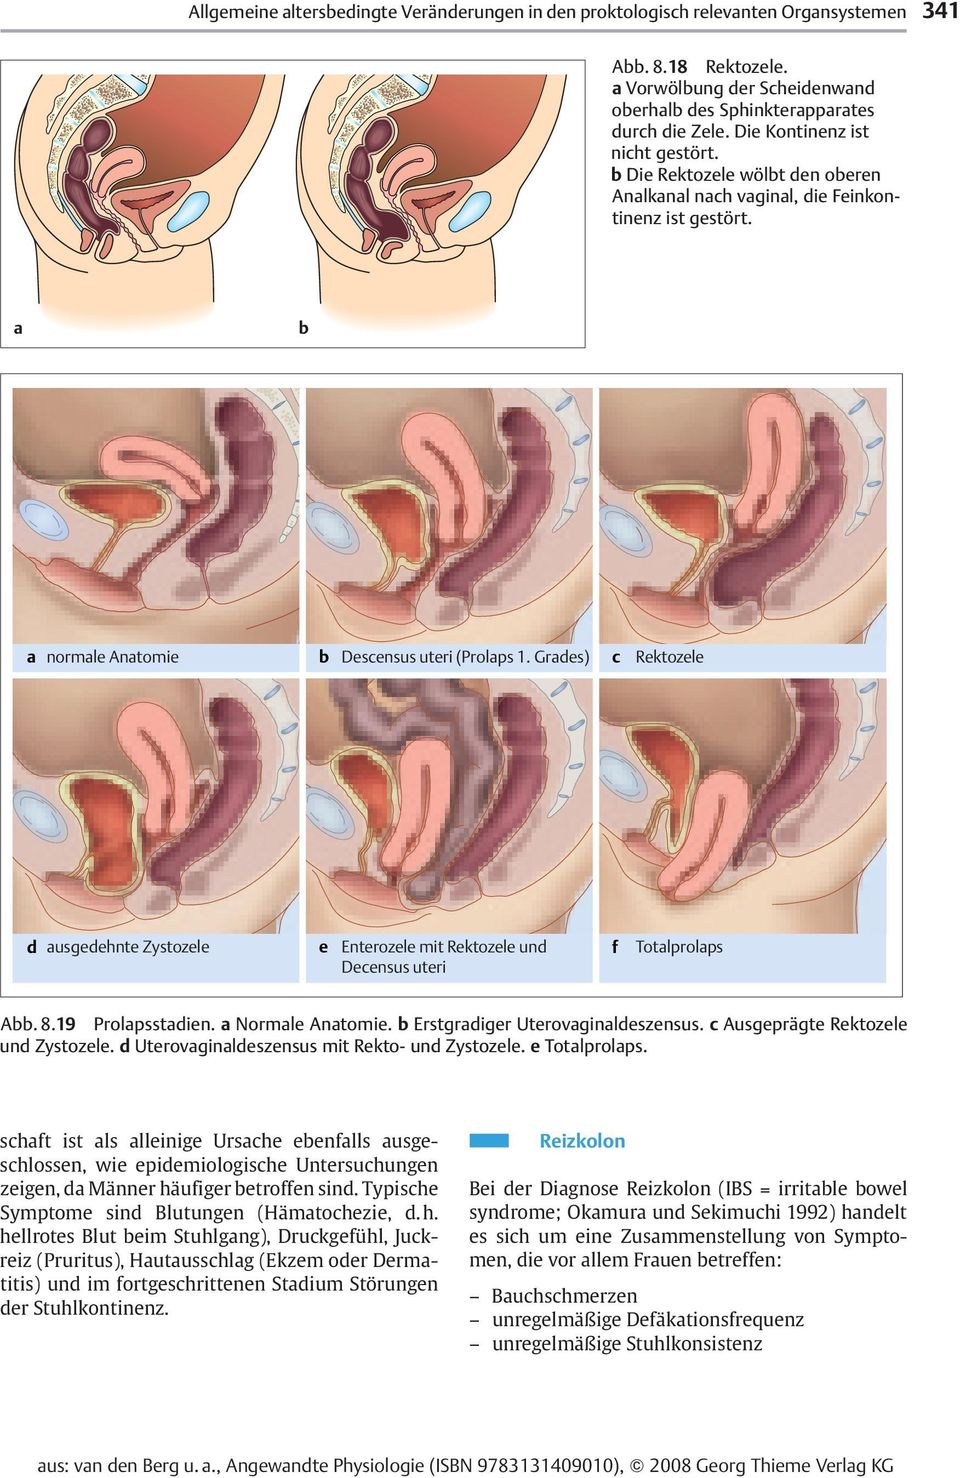 Grades) c Rektozele d ausgedehnte Zystozele e Enterozele mit Rektozele und Decensus uteri f Totalprolaps Abb. 8.19 Prolapsstadien. a Normale Anatomie. b Erstgradiger Uterovaginaldeszensus.